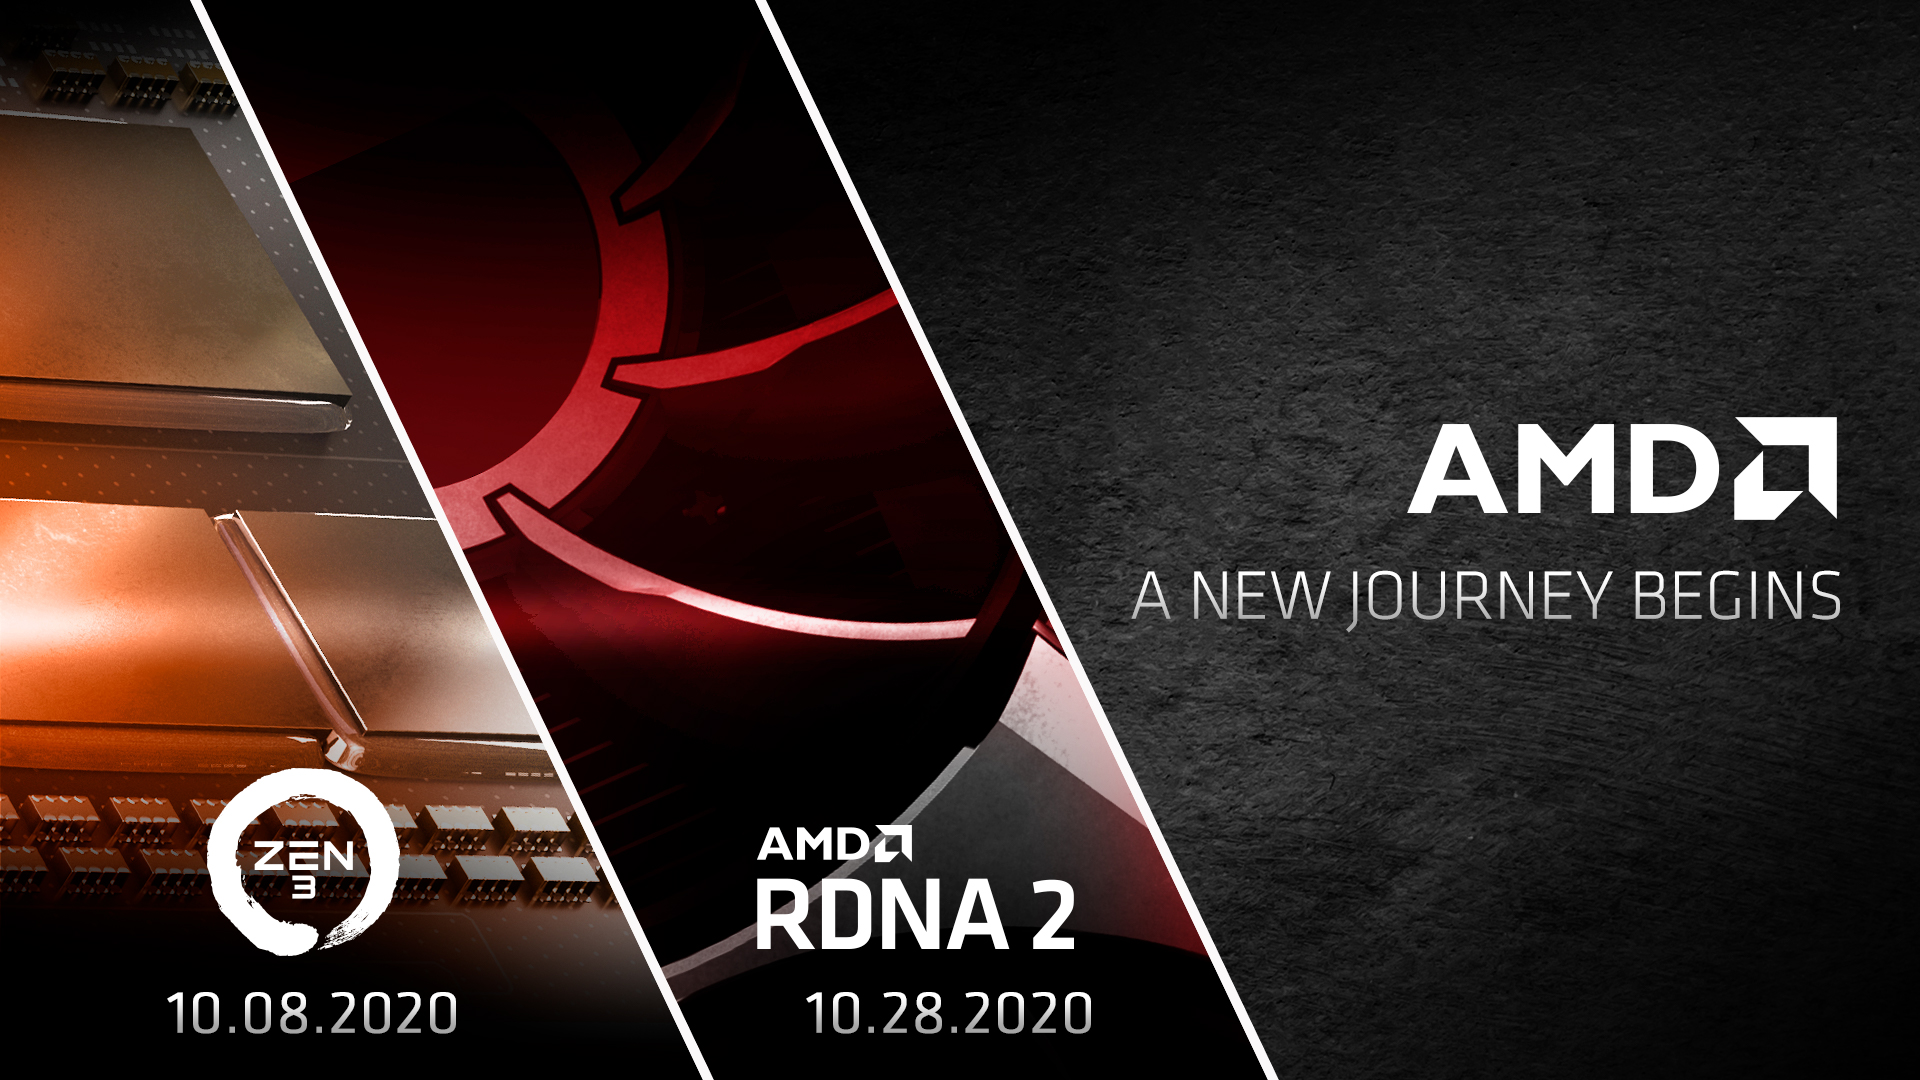 new journey 1920x10801675 นับวันรอได้เลย! โปรเซสเซอร์ AMD Ryzen และกราฟิกการ์ด AMD Radeon กับการเริ่มต้นการเดินทางครั้งใหม่